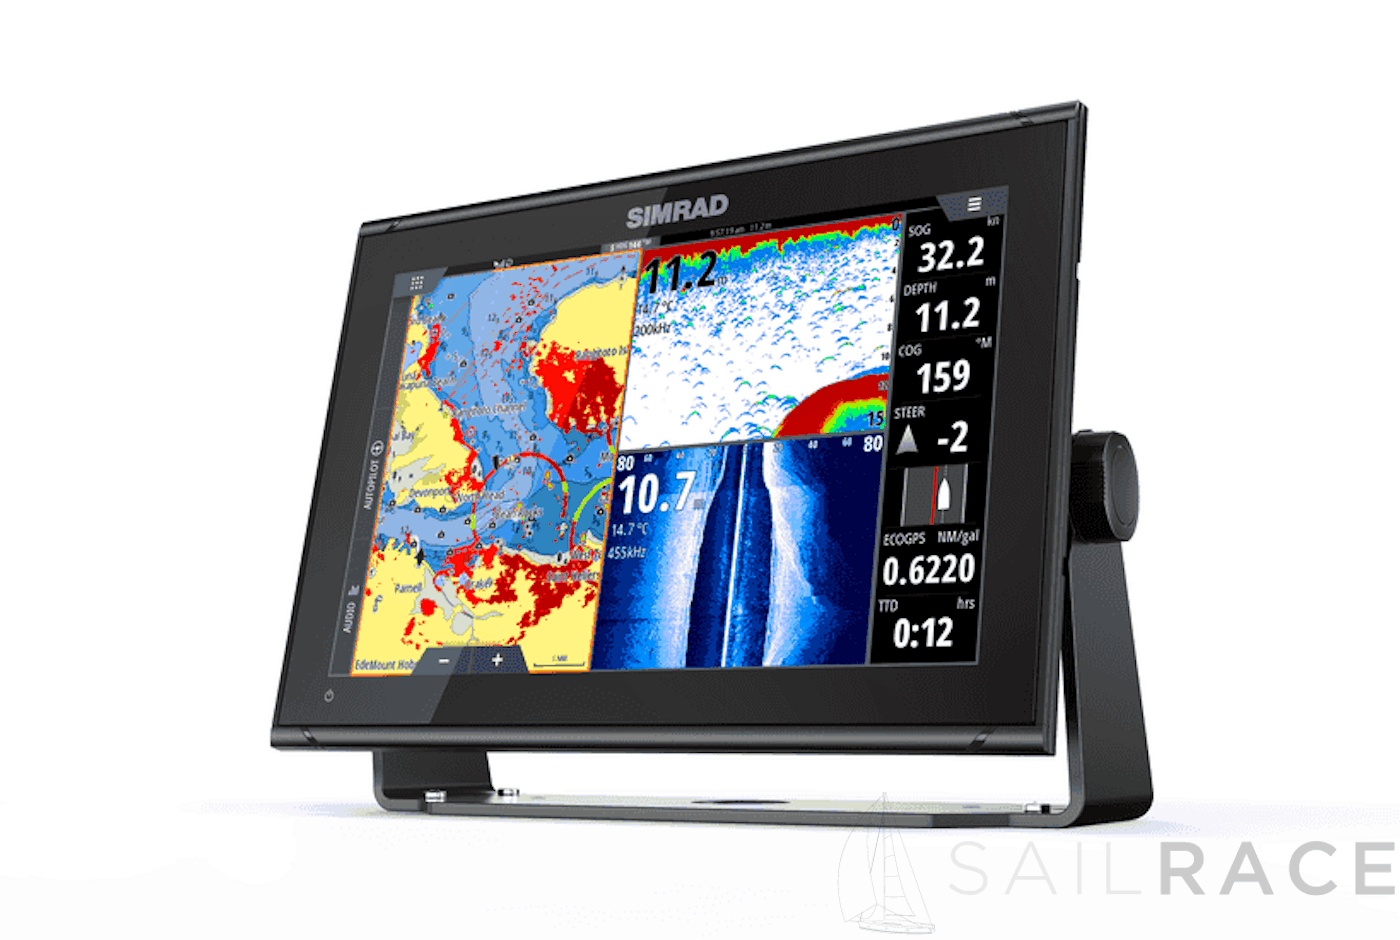 Simrad 12-inch chartplotter and radar display with Broadband 3G™ radar and TotalScan™ transducer - image 3